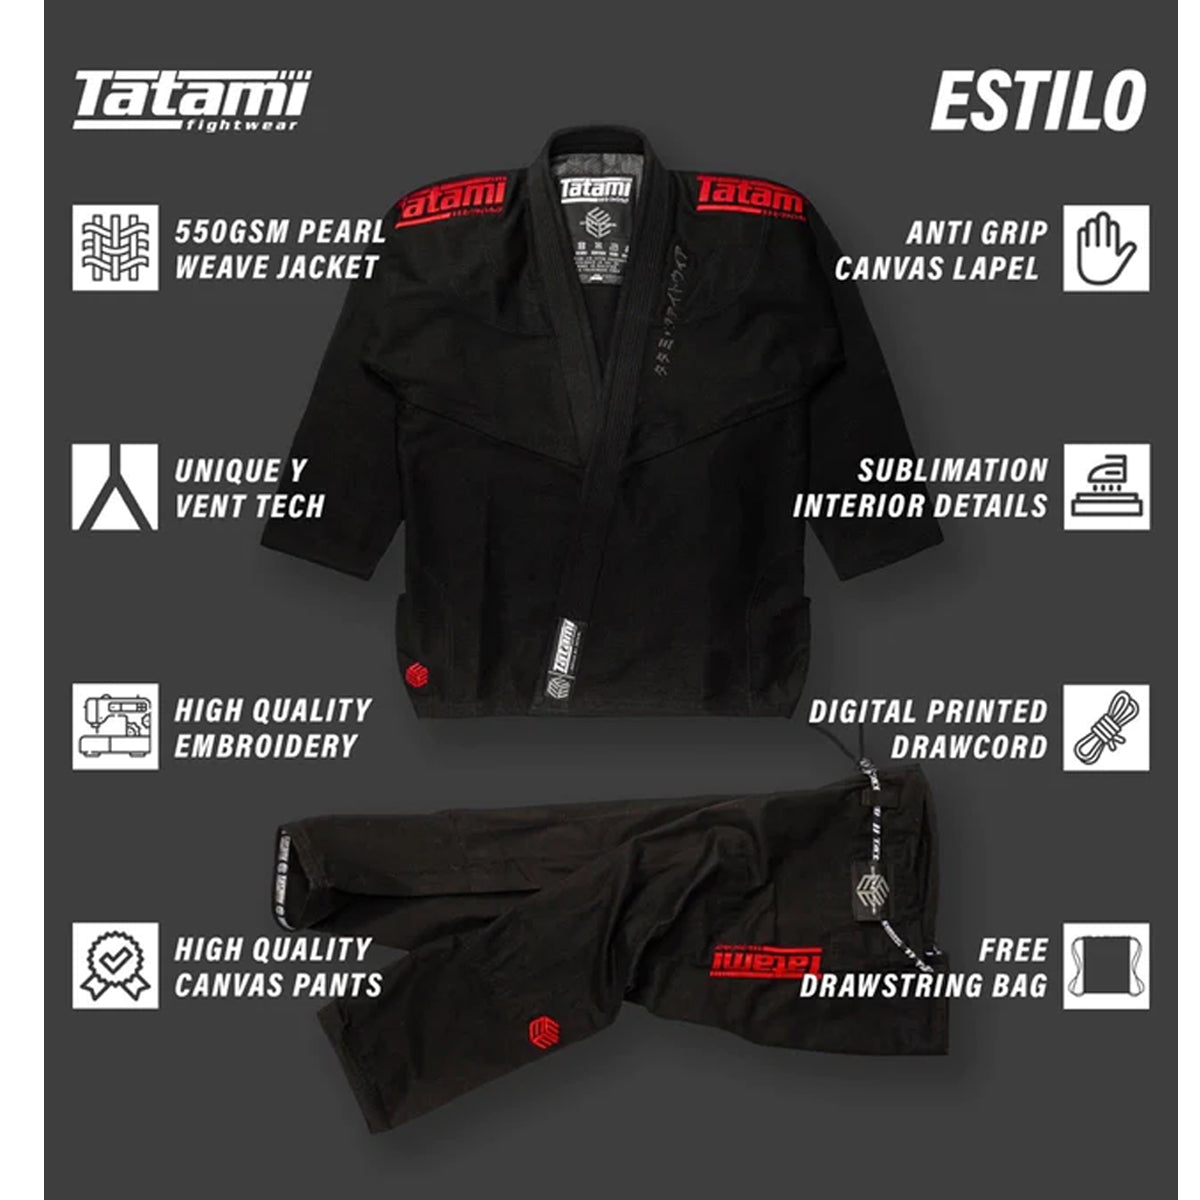 Tatami Fightwear Estilo Black Label BJJ Gi - Red/Black Tatami Fightwear